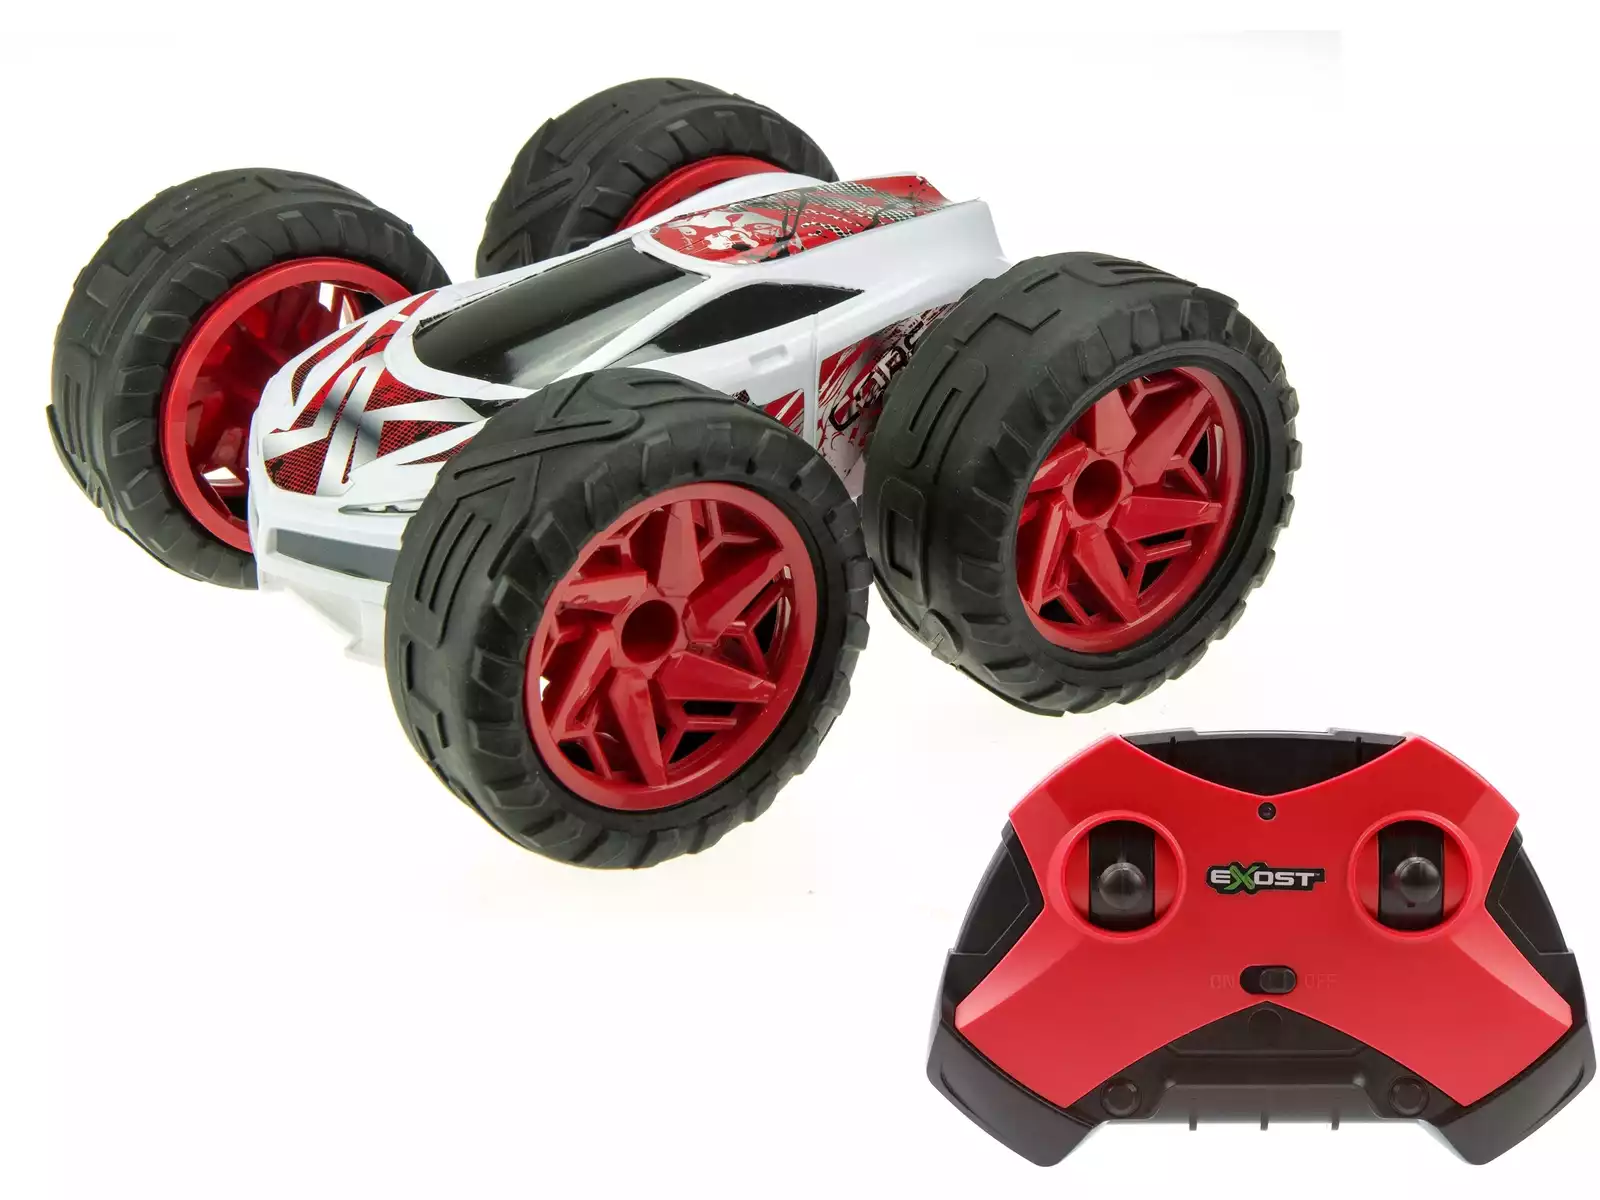 Hot Wheels - Mondo Motors - voiture télécommandée - Monster Truck - Bone  Shaker -10cm - tout-terrain - wheelies - jouet enfan